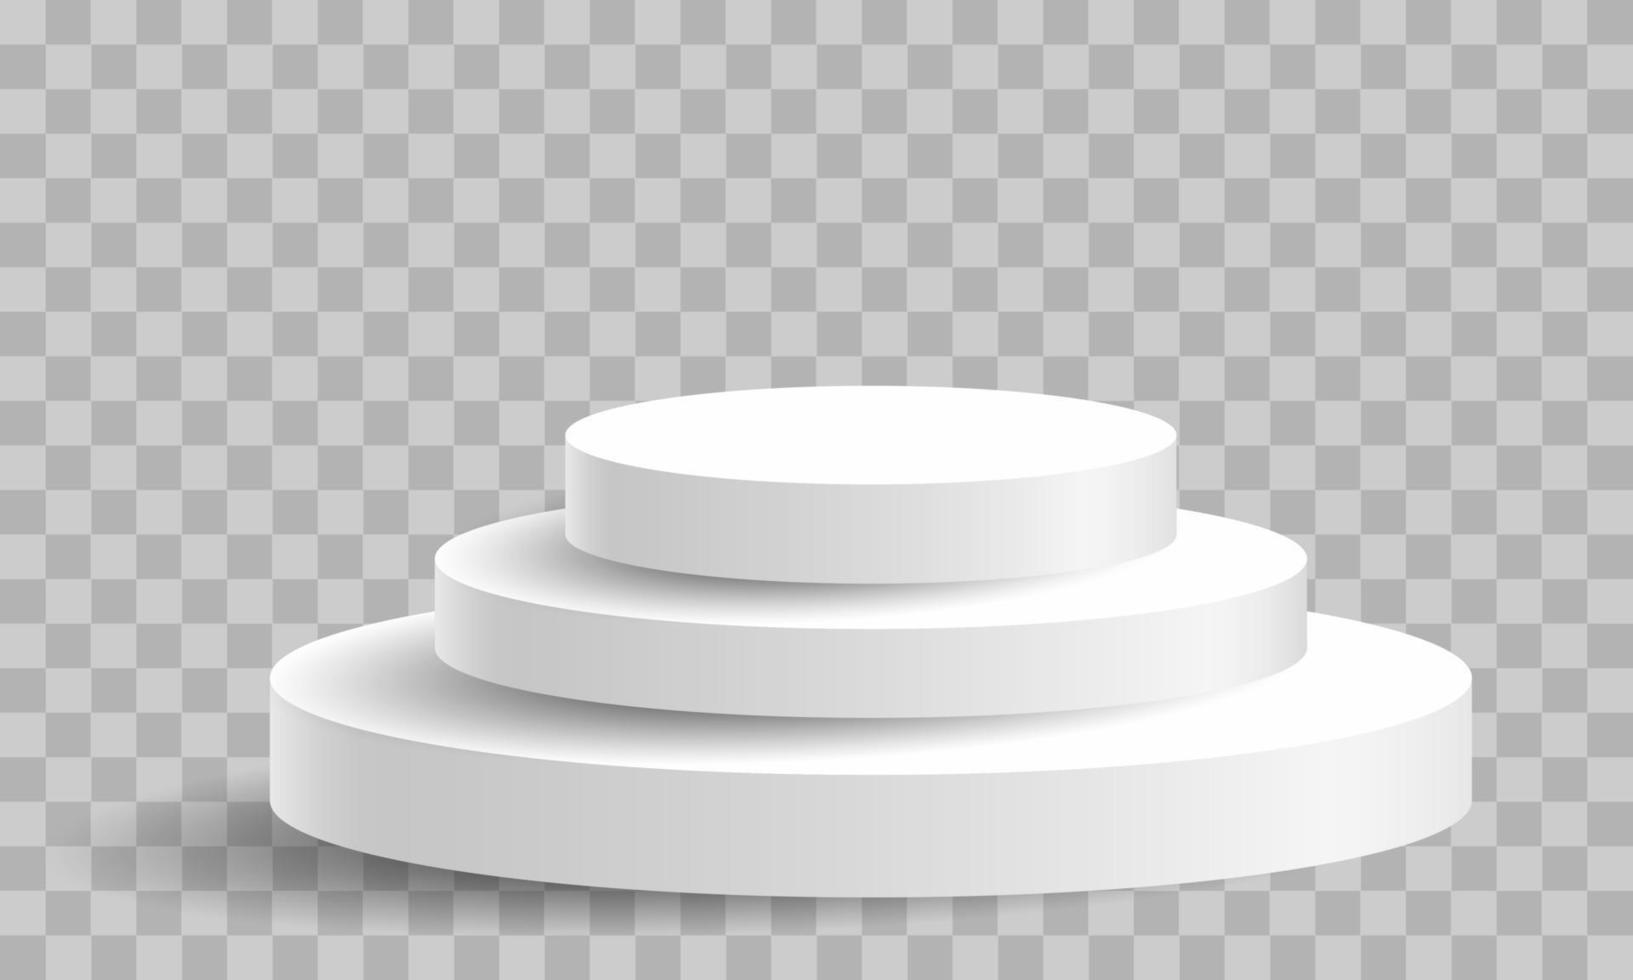 realista blanco circulo podio pasos en gris a cuadros vector